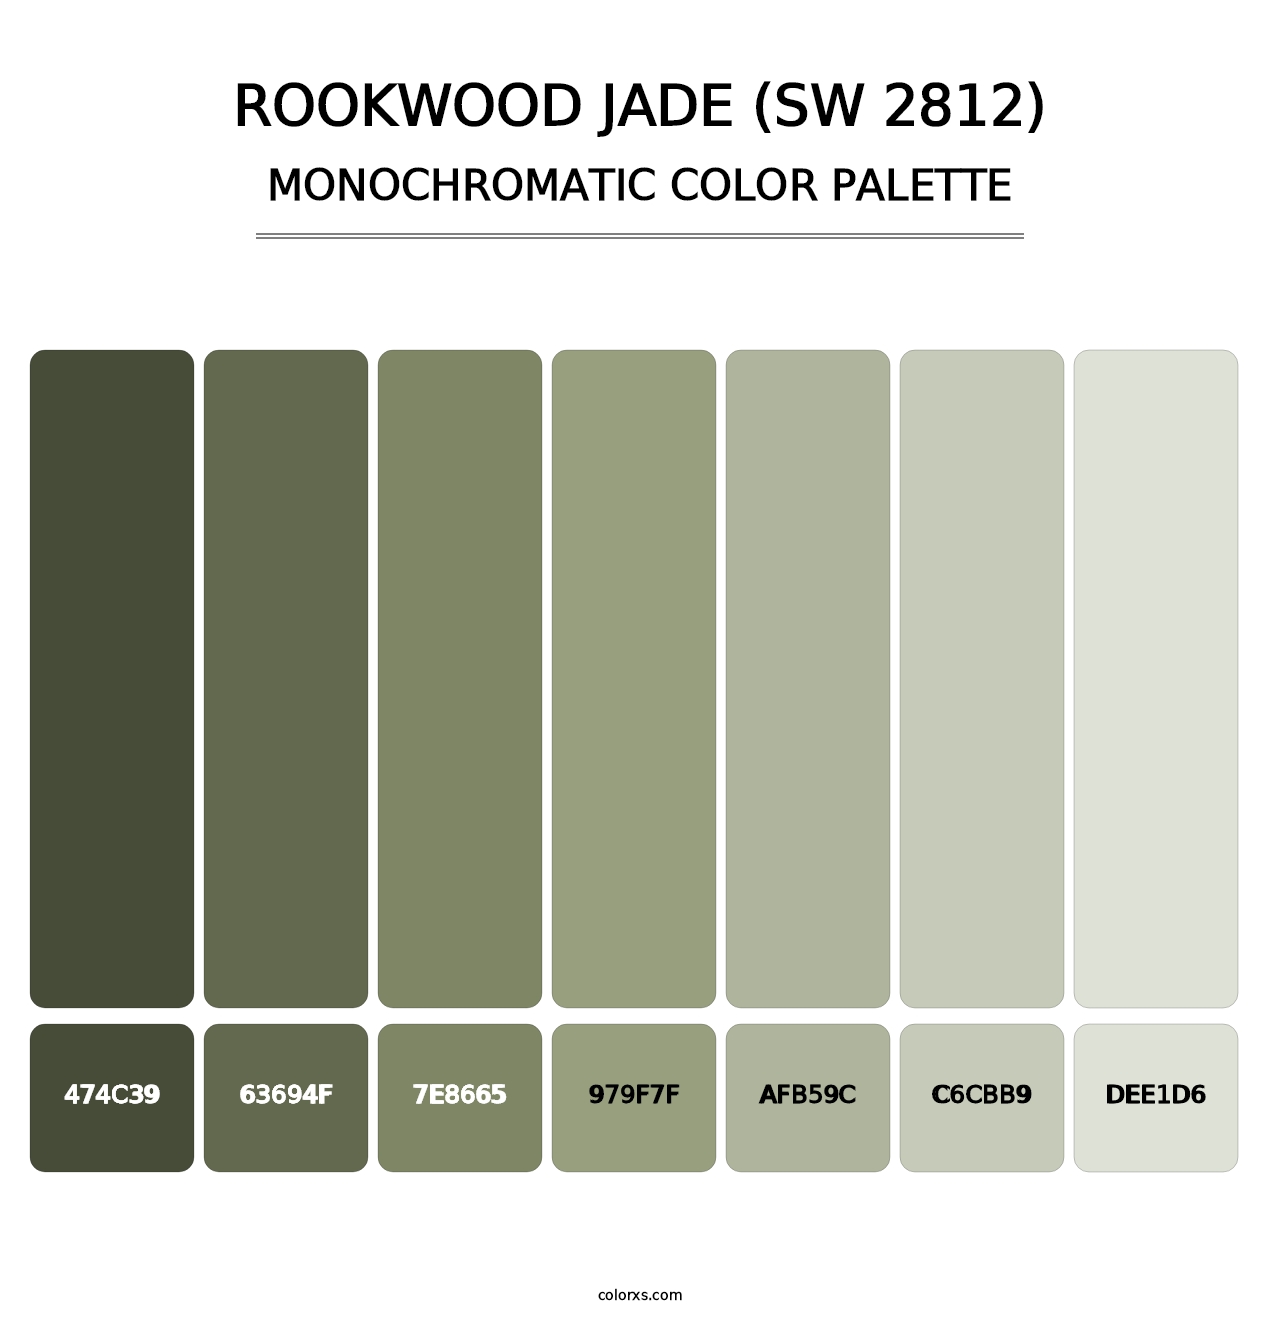 Rookwood Jade (SW 2812) - Monochromatic Color Palette